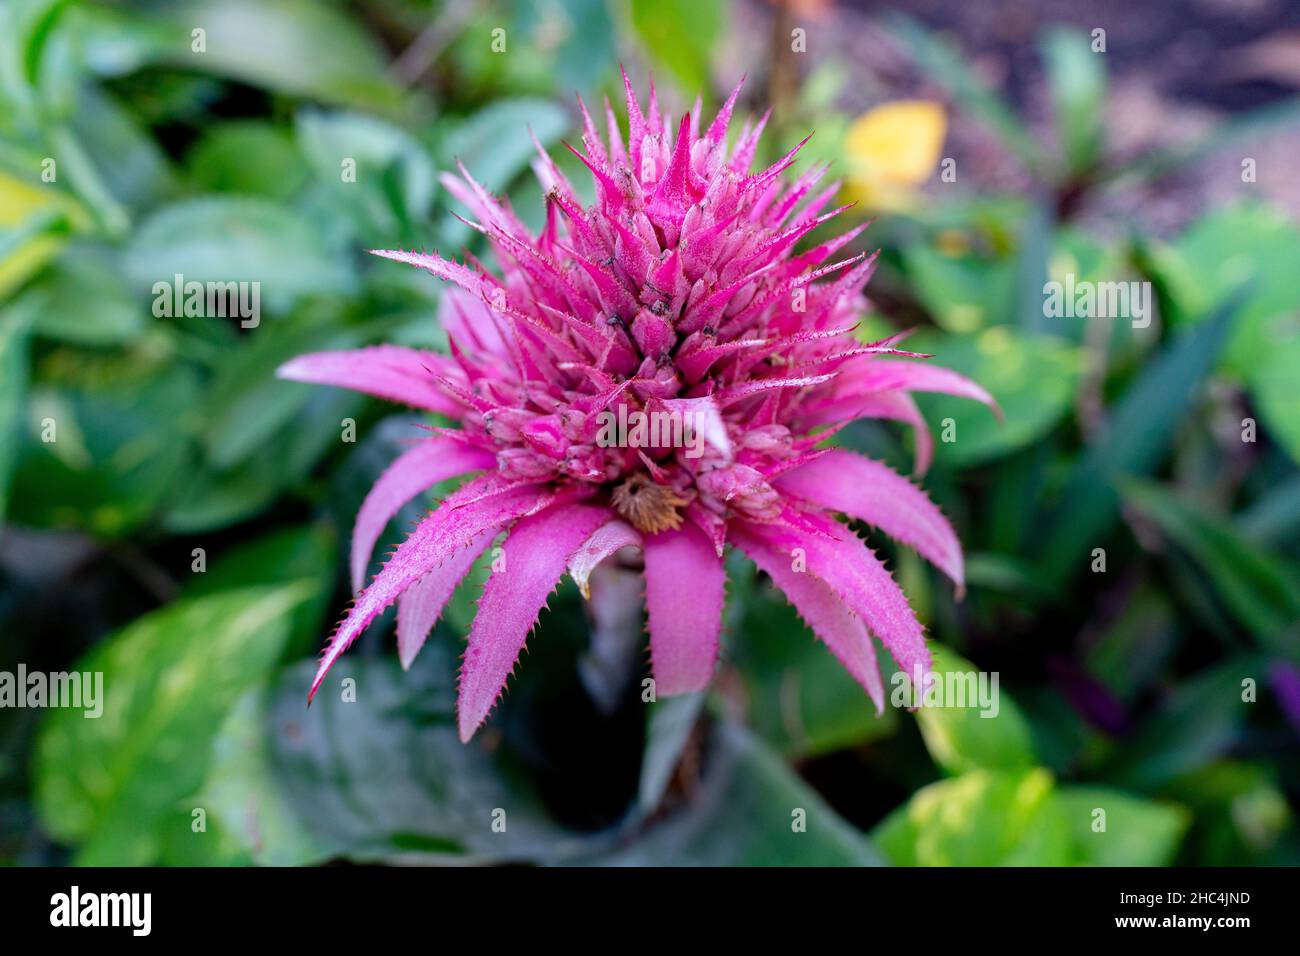 Closeup shot of a blooming Aechmea flower Stock Photo